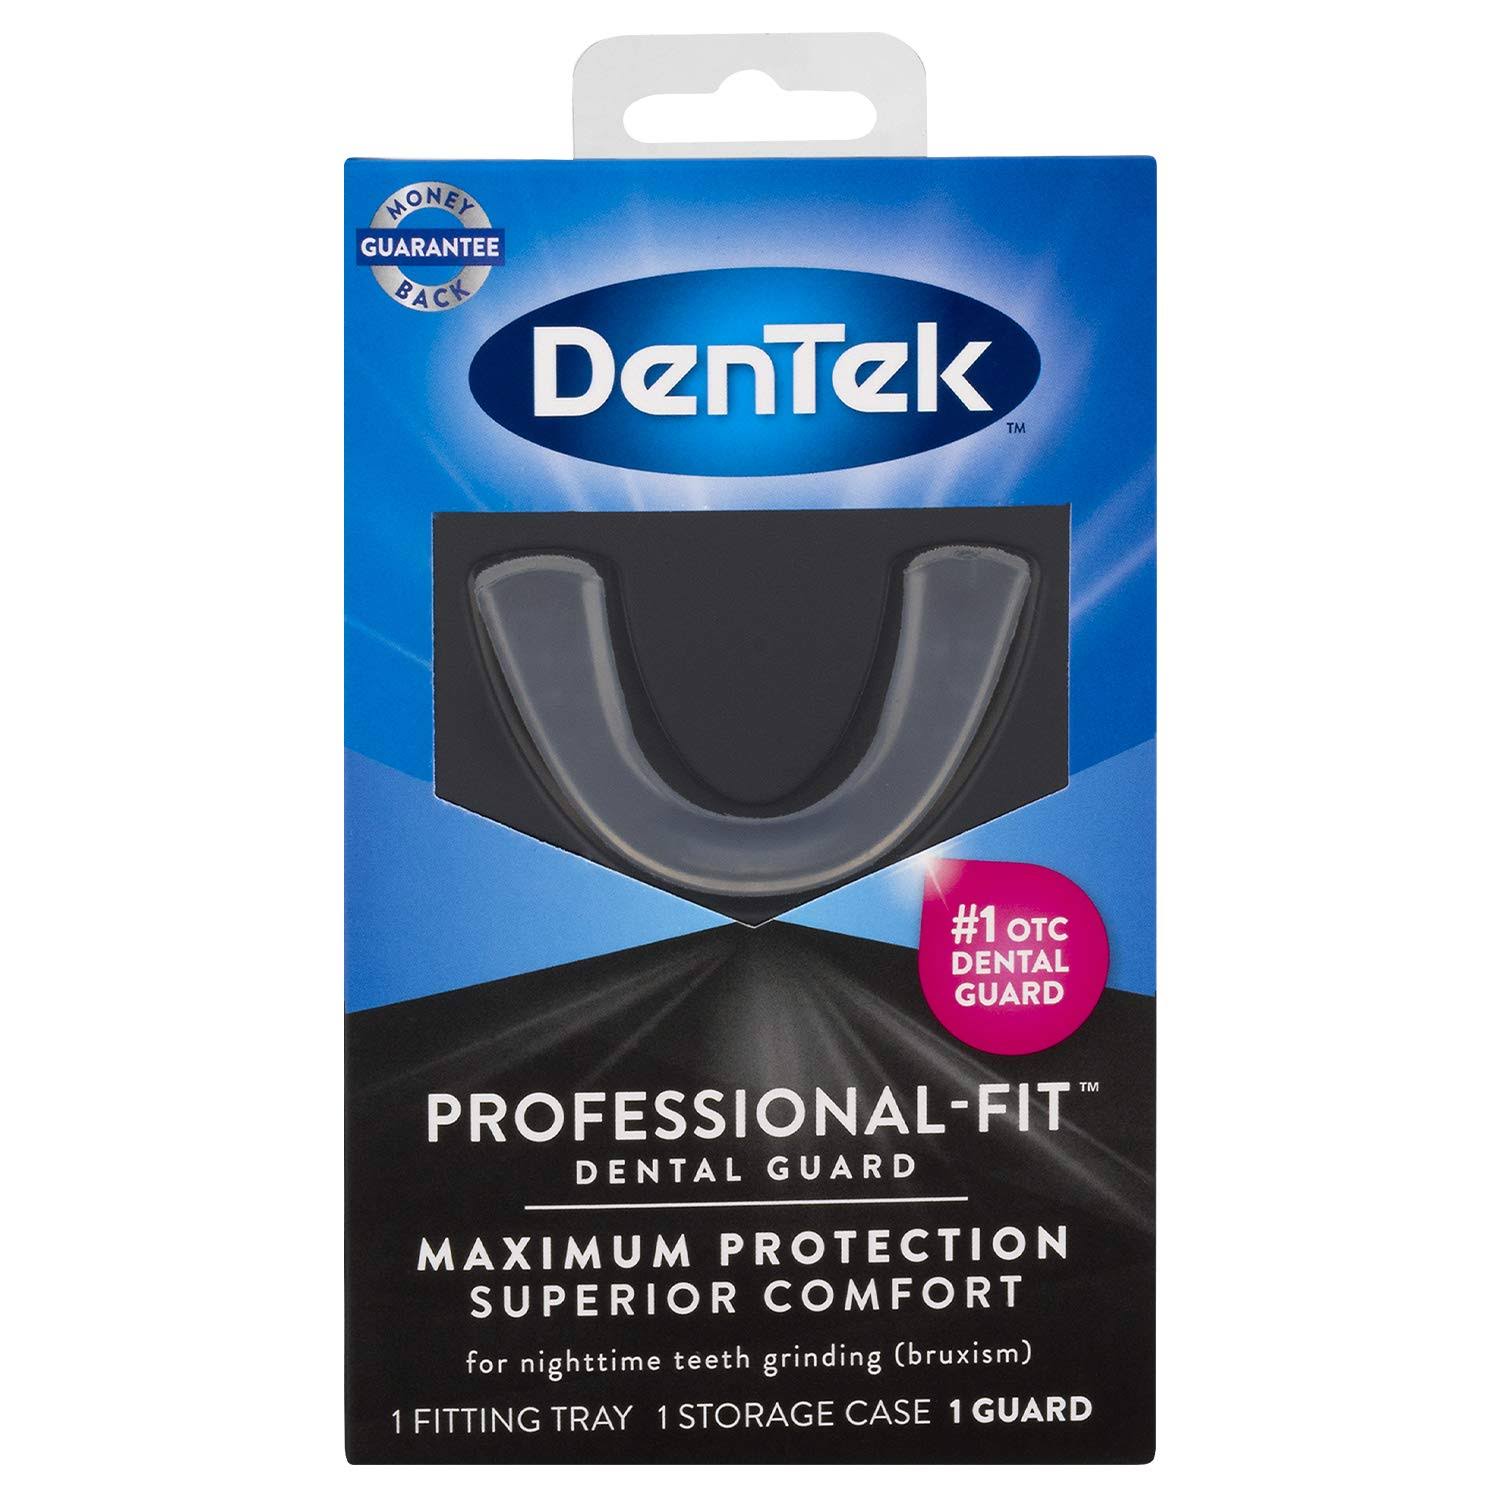 DenTek Professional Fit Maximum Protection Dental Guard - 1 Each